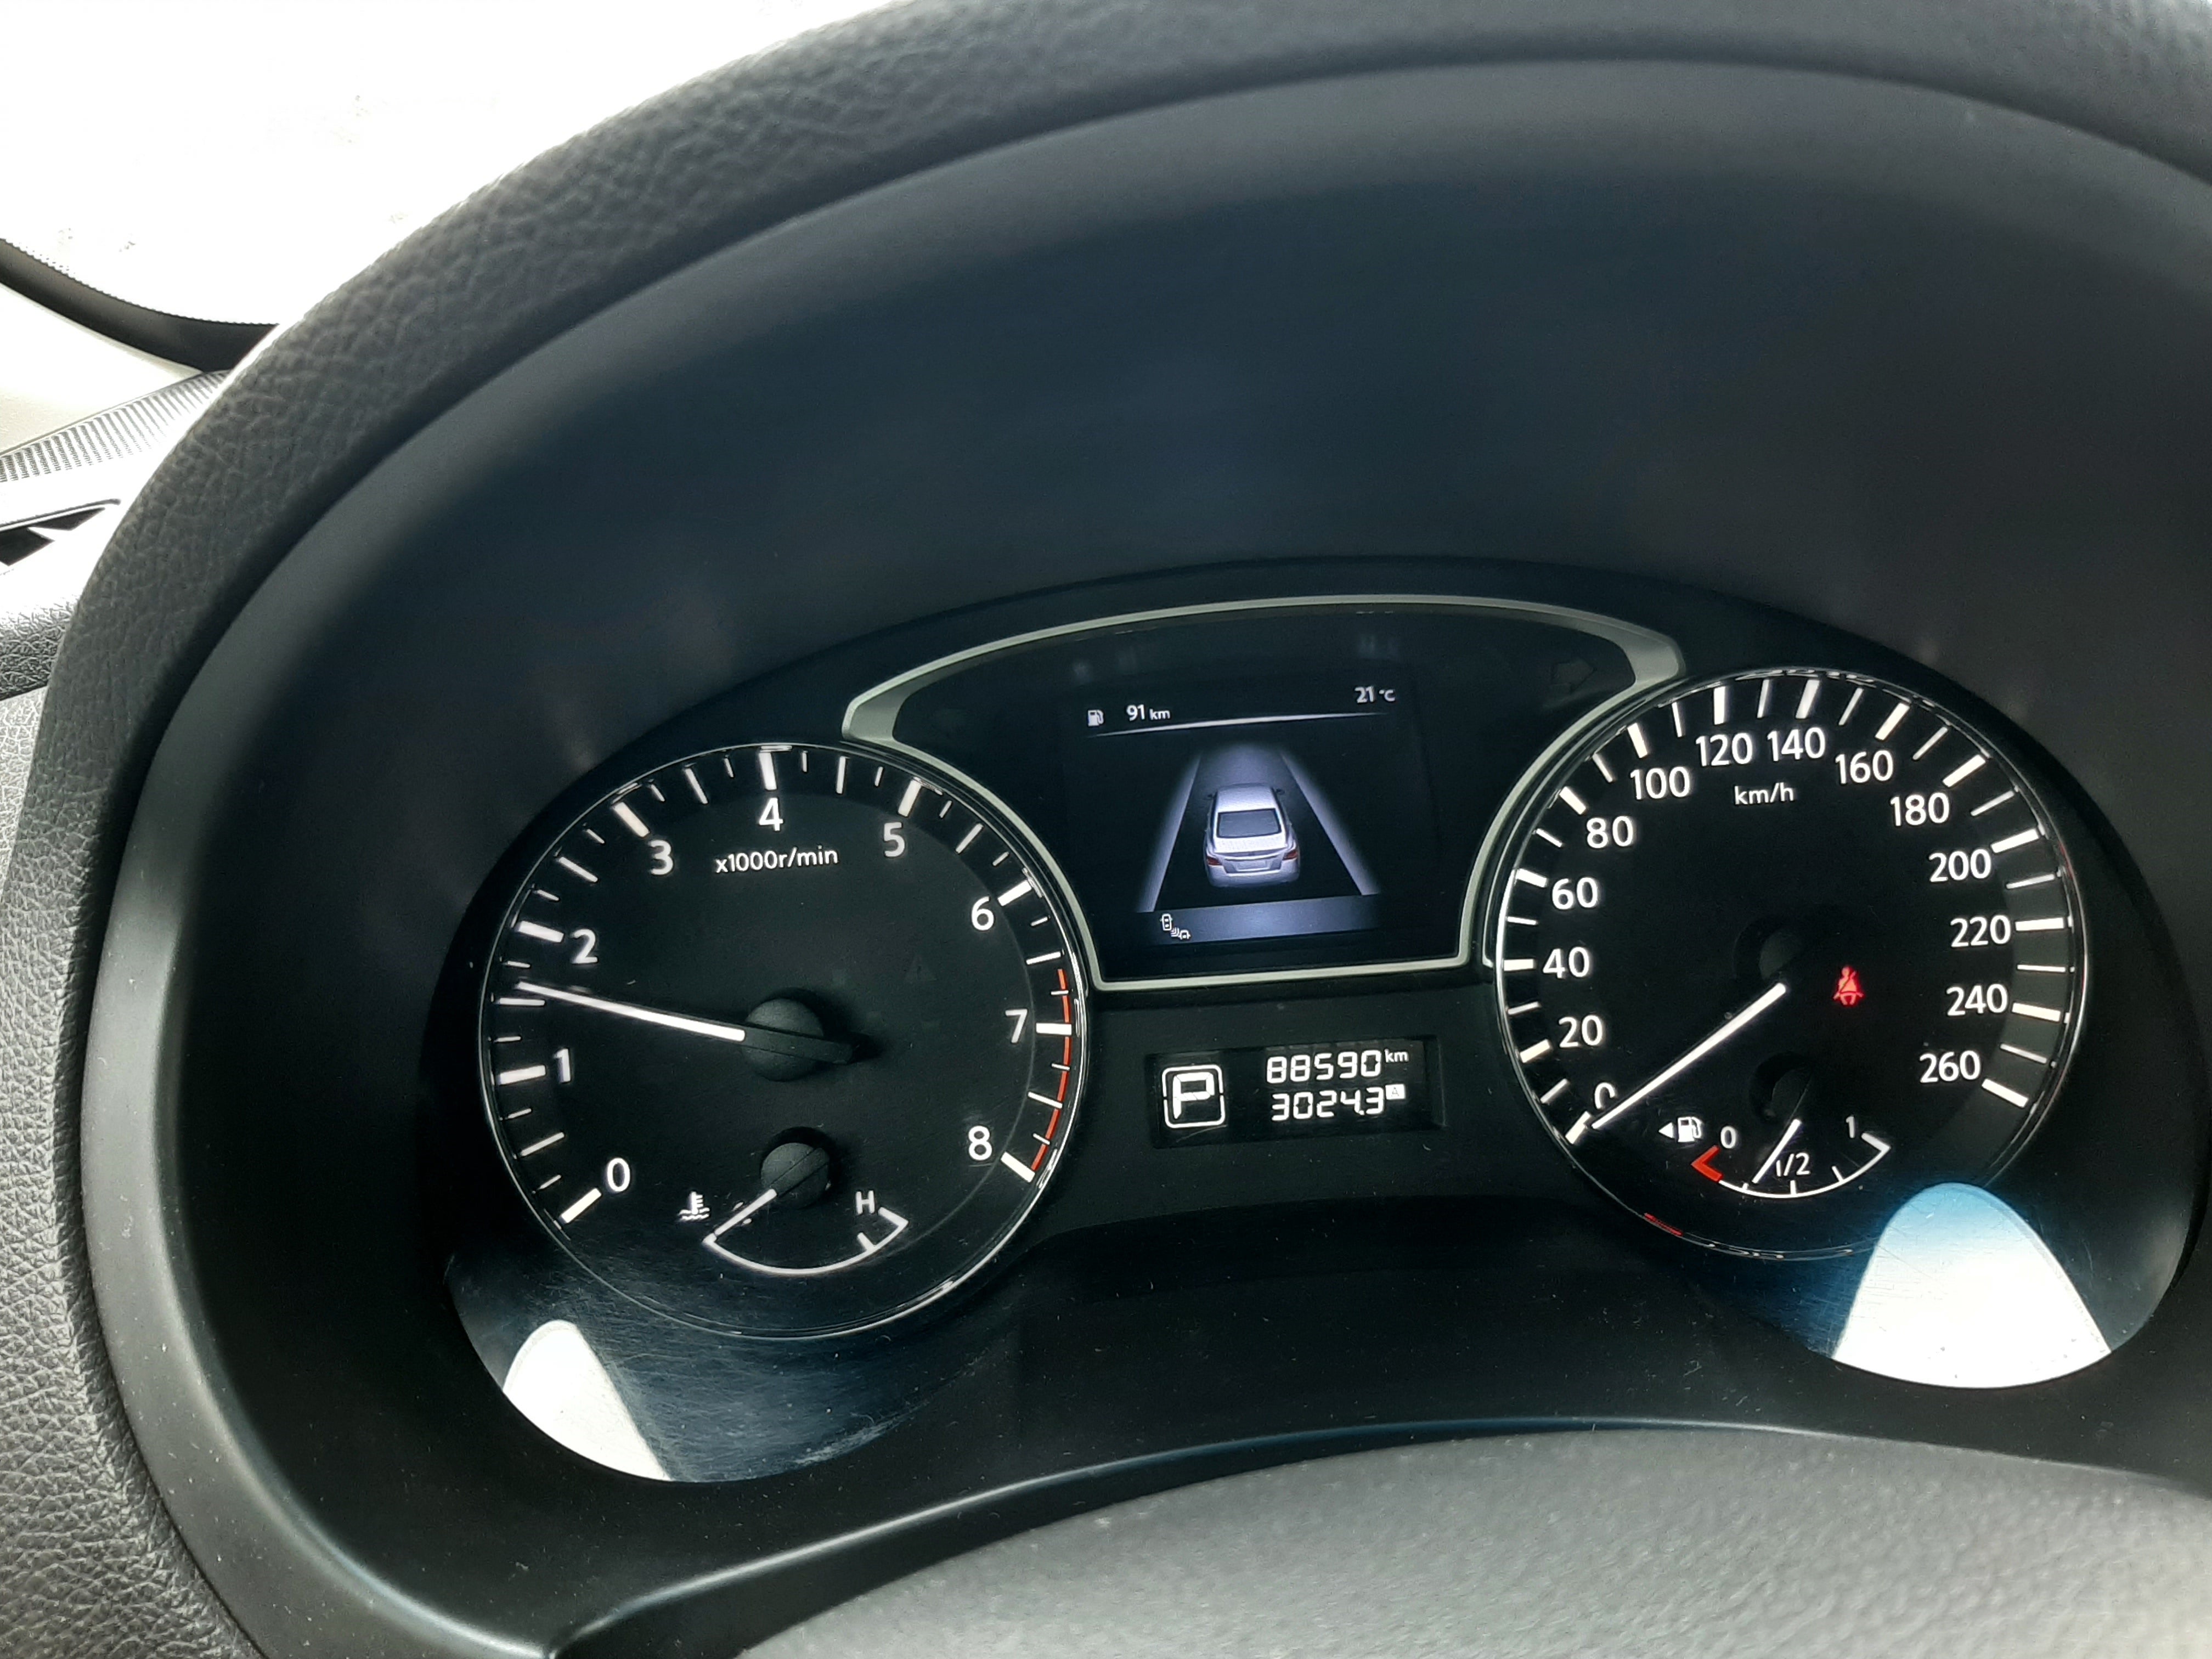 2015 Nissan ALTIMA 4 PTS EXCLUSIVE V6 CVT CLIMATRONIC PIEL QC BL GPS BLUETOOTH RA-18